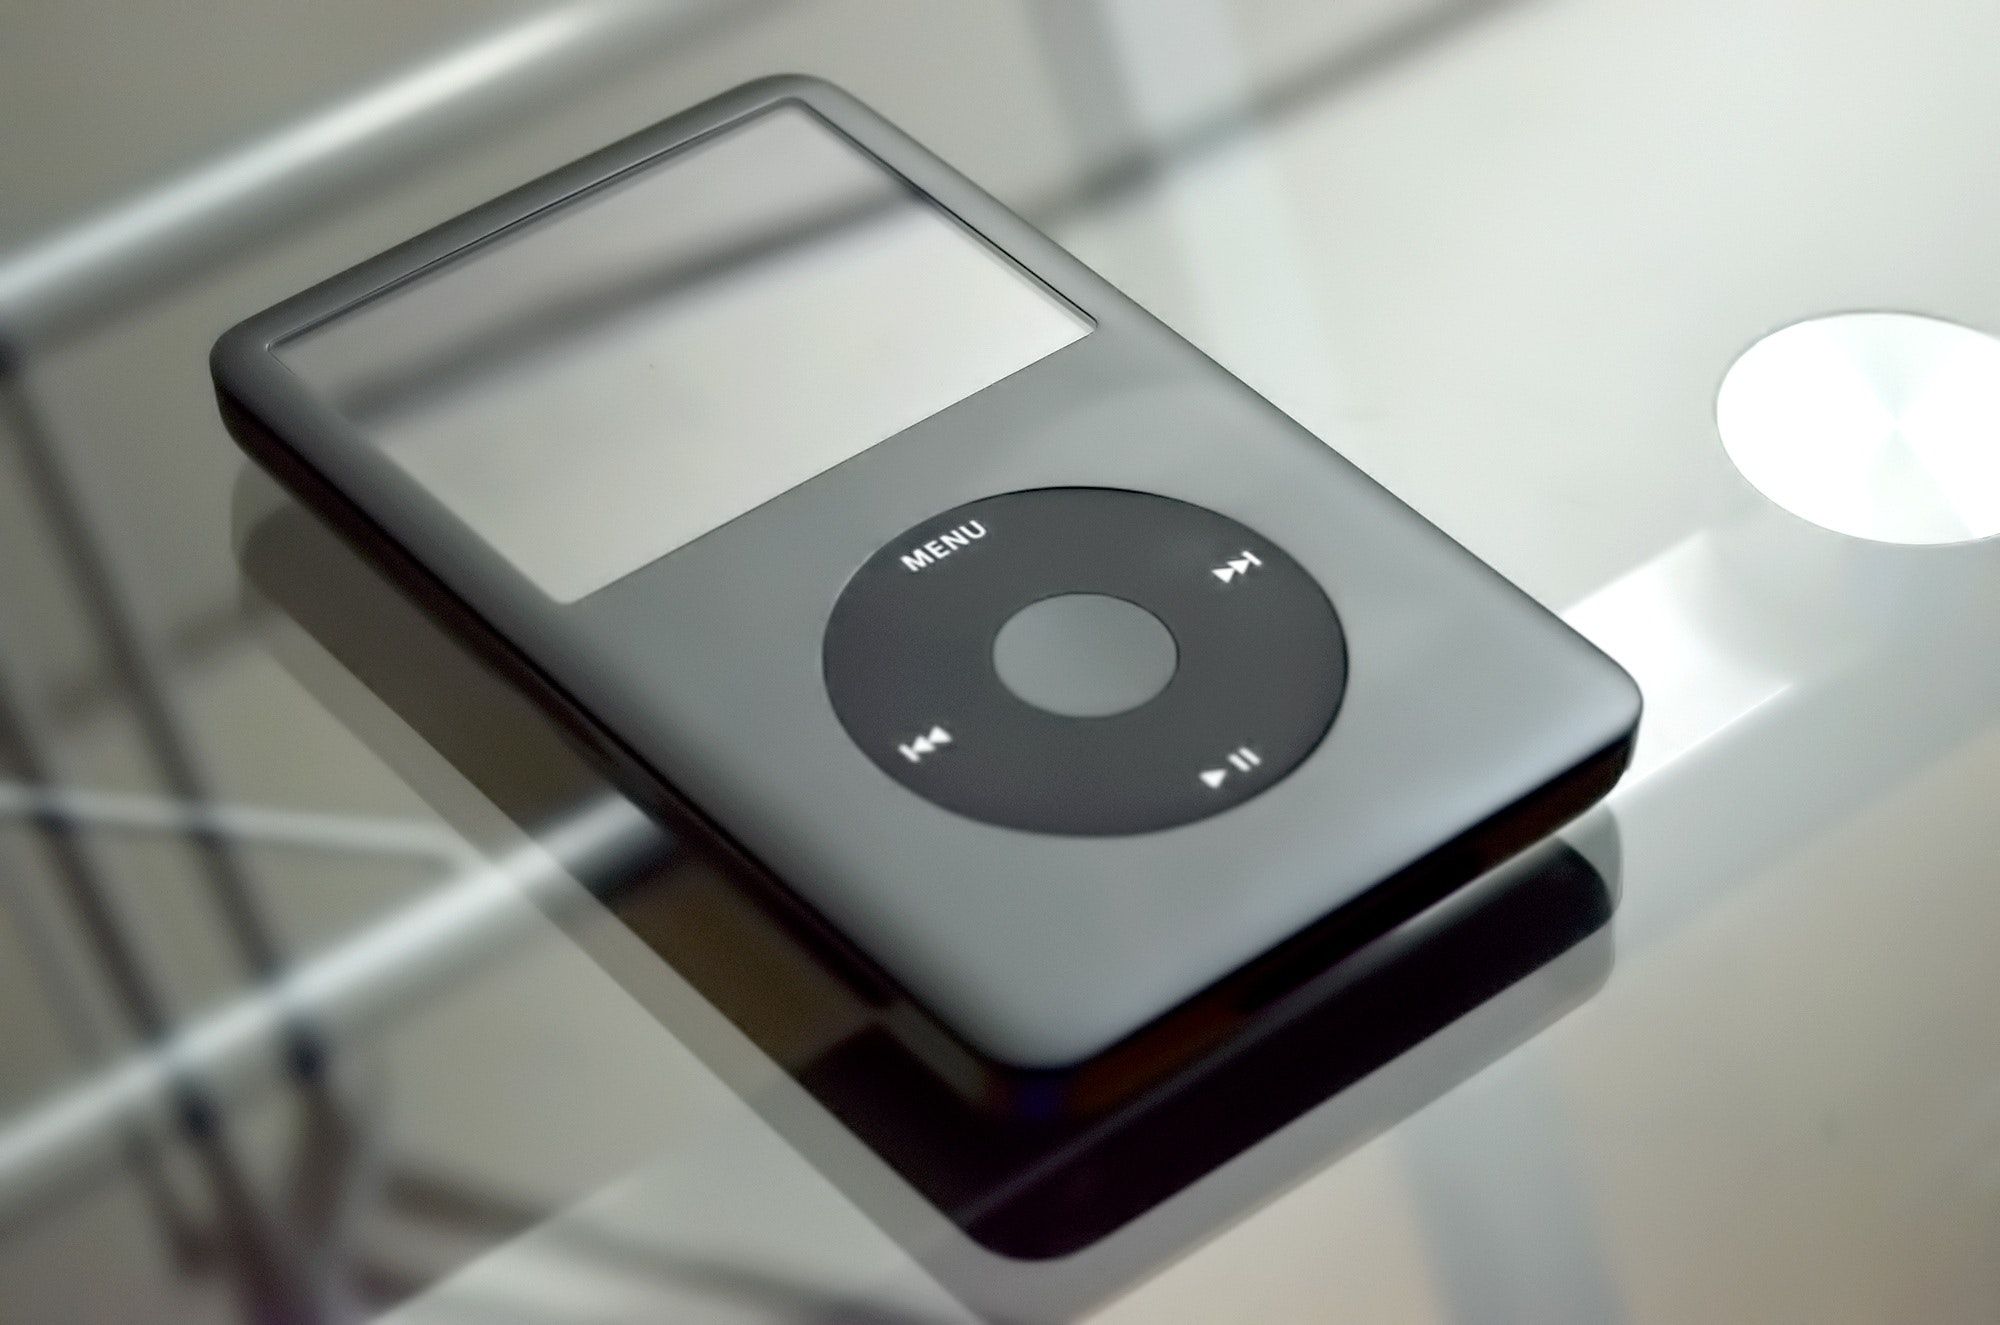 Gray iPod on glass table